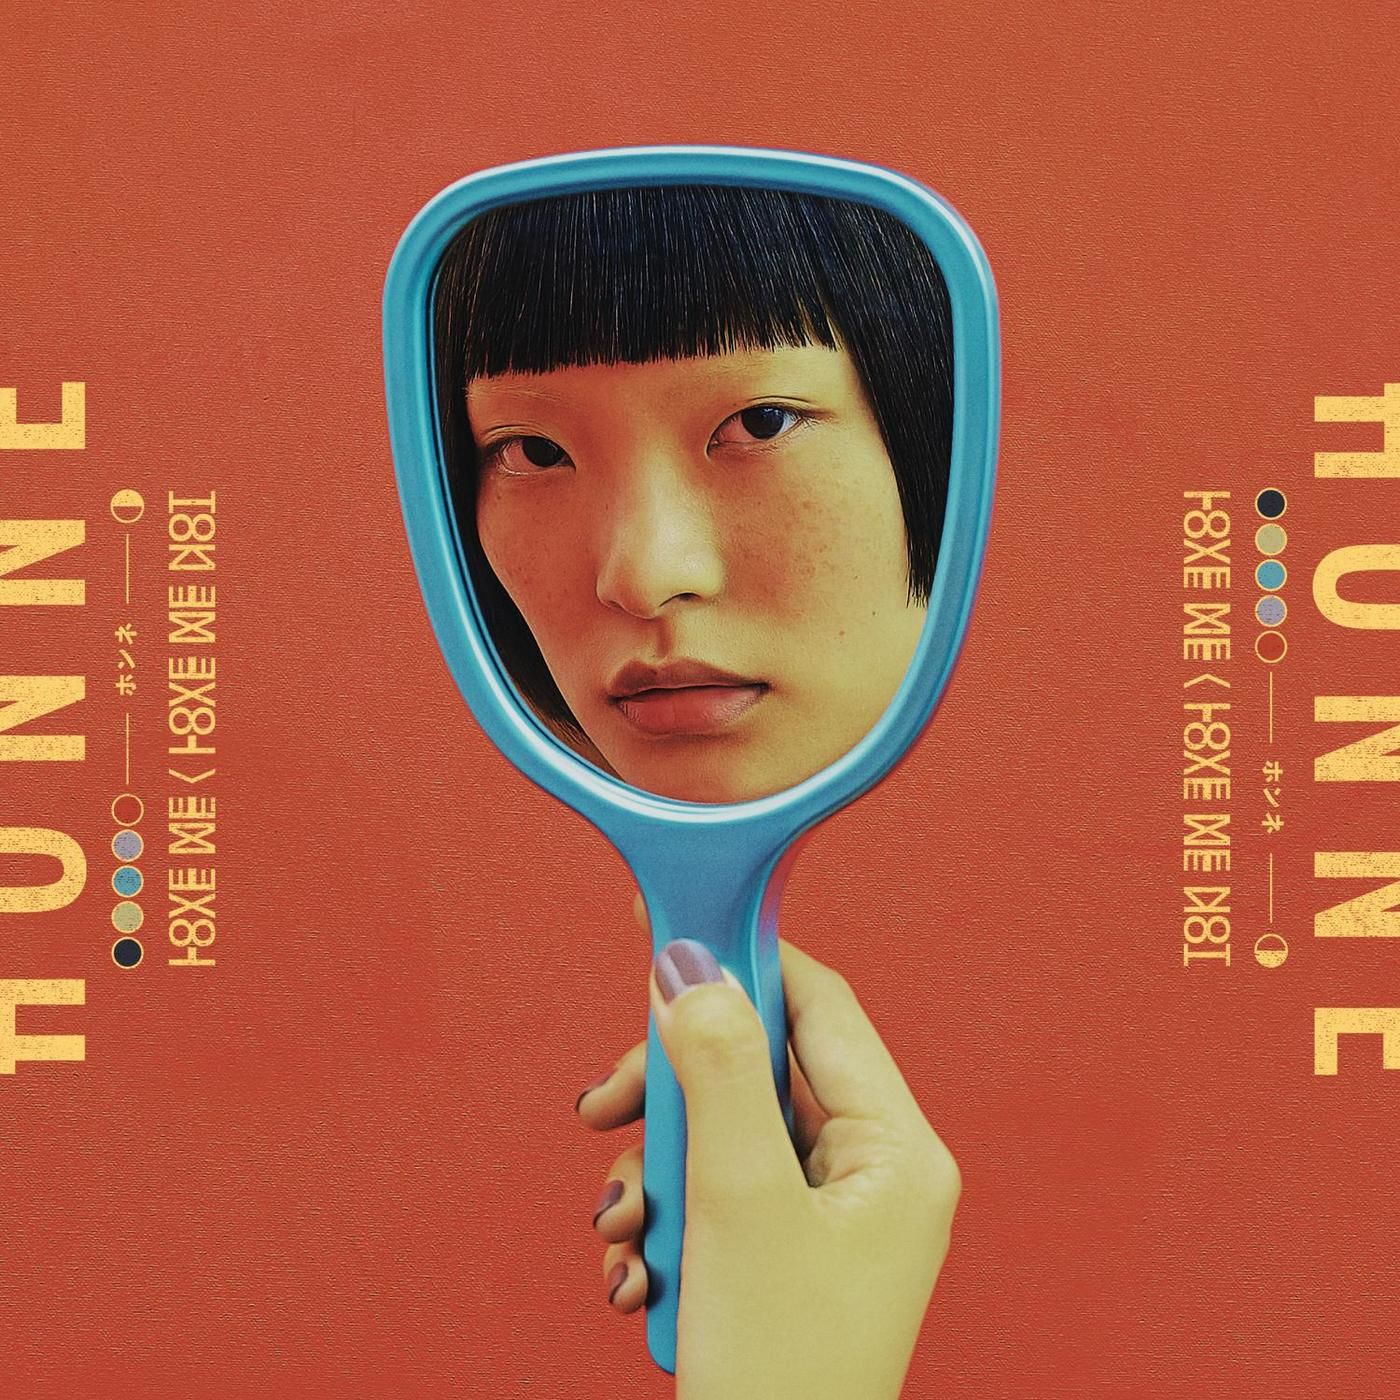 HONNE - Sometimes ◐ (Instrumental) (잔잔, 신비, 몽환, 활기, 희망)